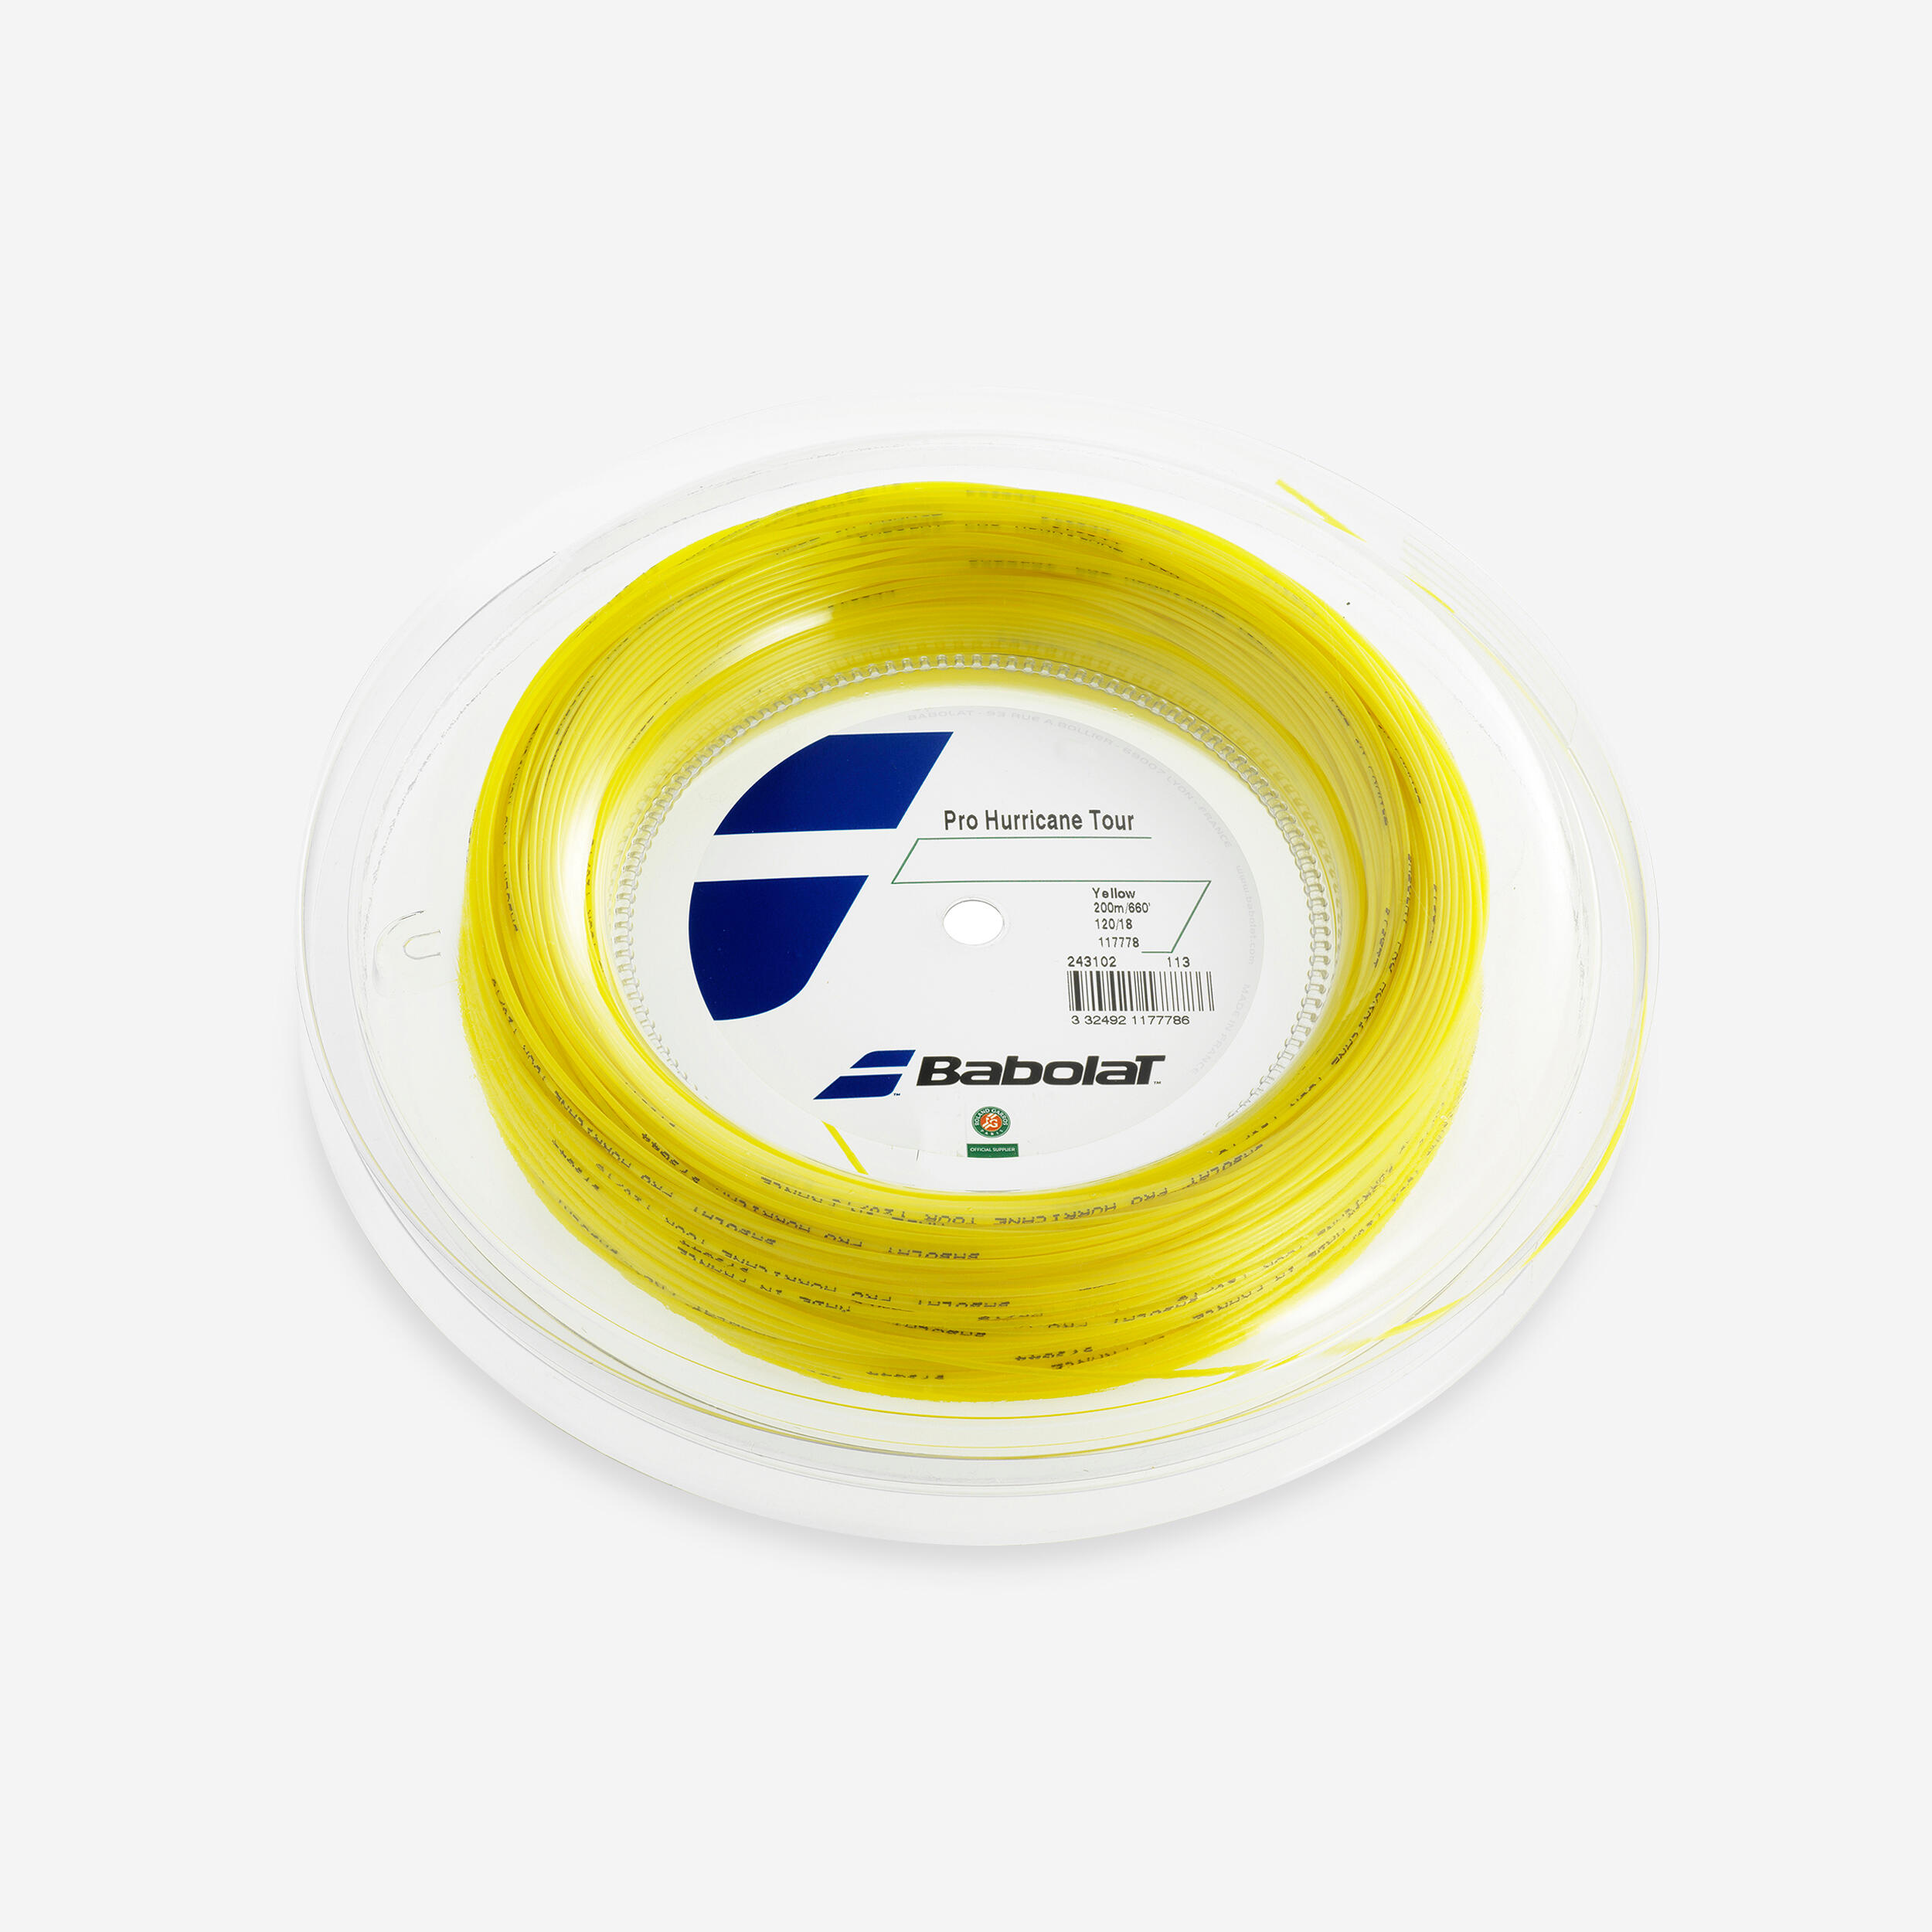 BABOLAT 1.25 mm x 200 m Monofilament Tennis String RPM Hurricane - Yellow